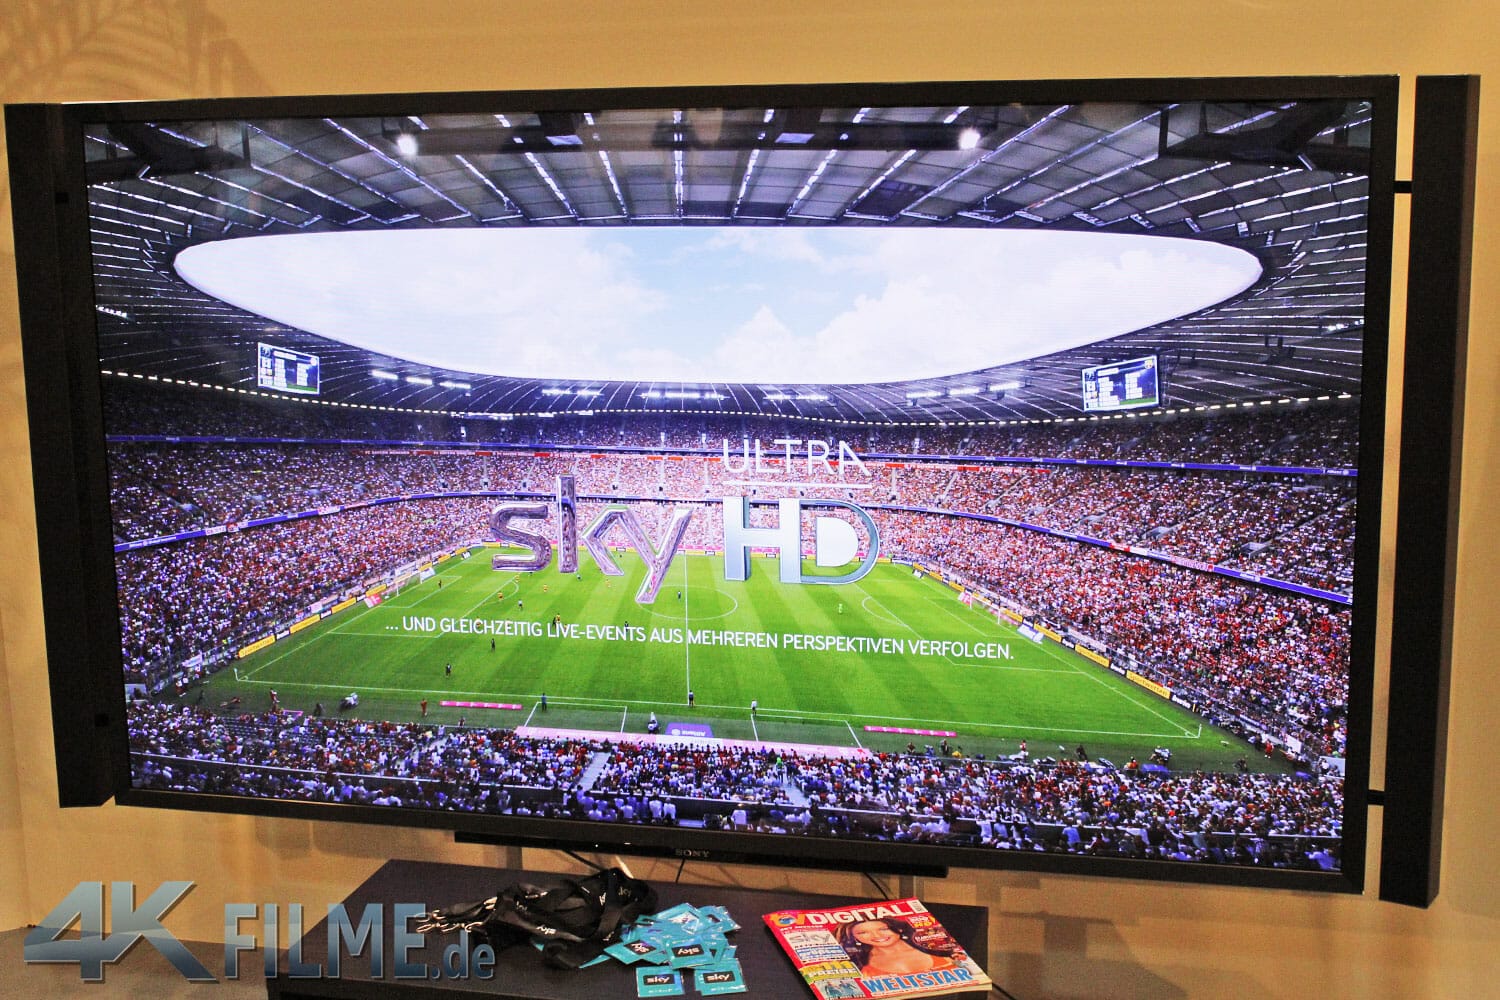 Sky überträgt erstmals Live Fußball in Ultra HD via Satellit